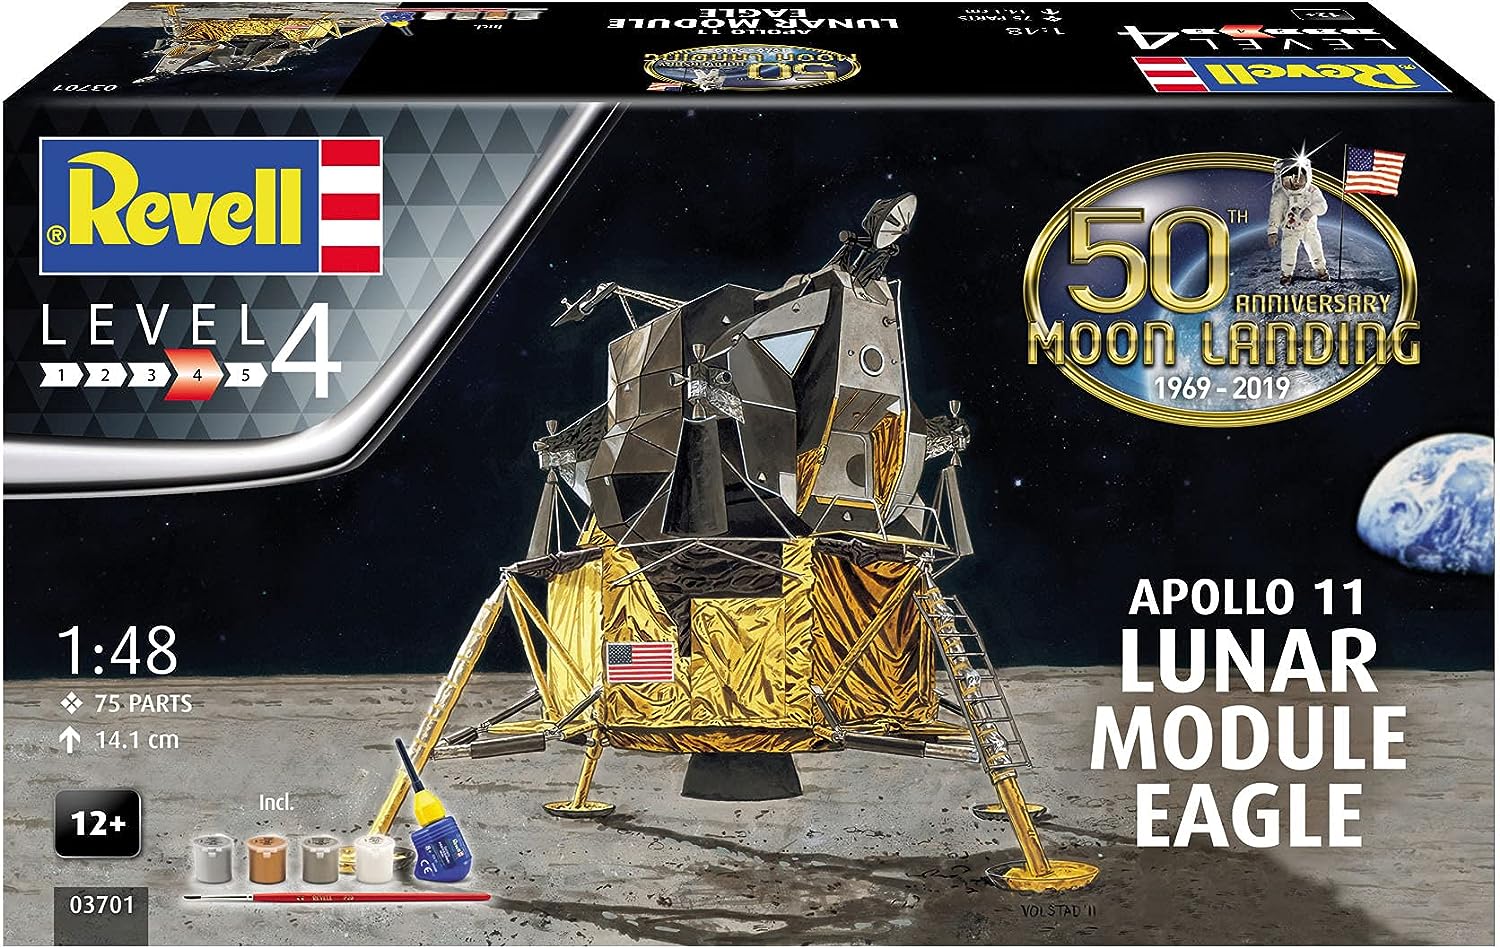 Revell Apollo 11 Lunar Module Gift Set 1:48 Kit